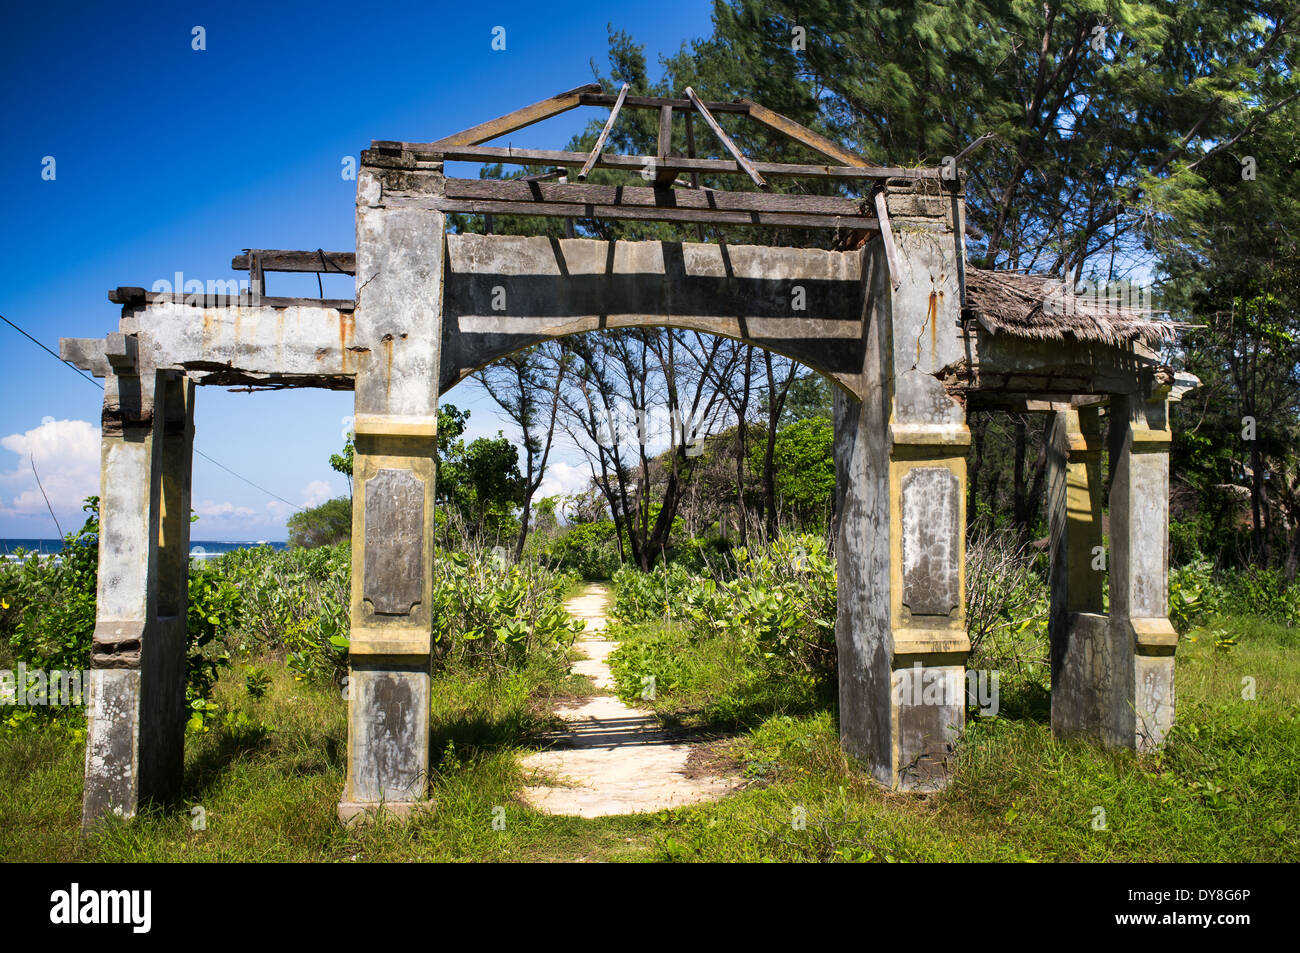 Old gate to the hotel resort, Gili Meno island, Indonesia, Asia Stock Photo